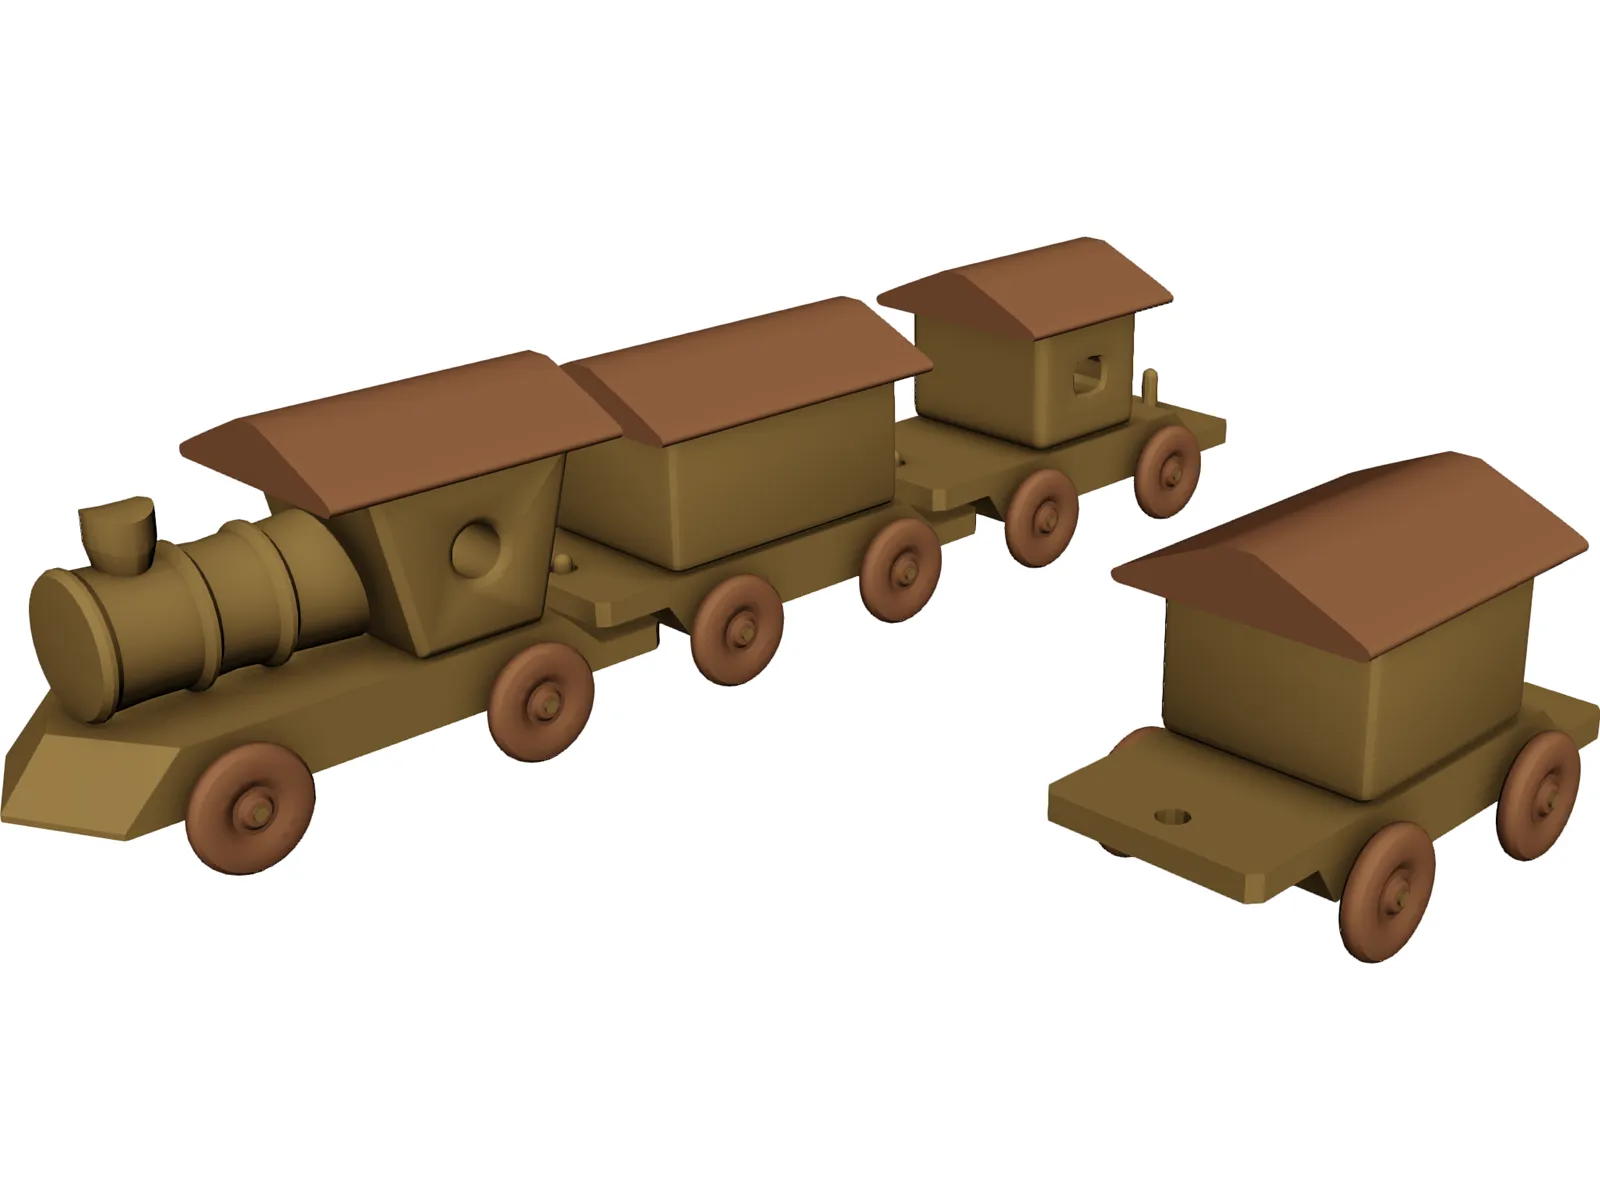 Toy Train 3D Model